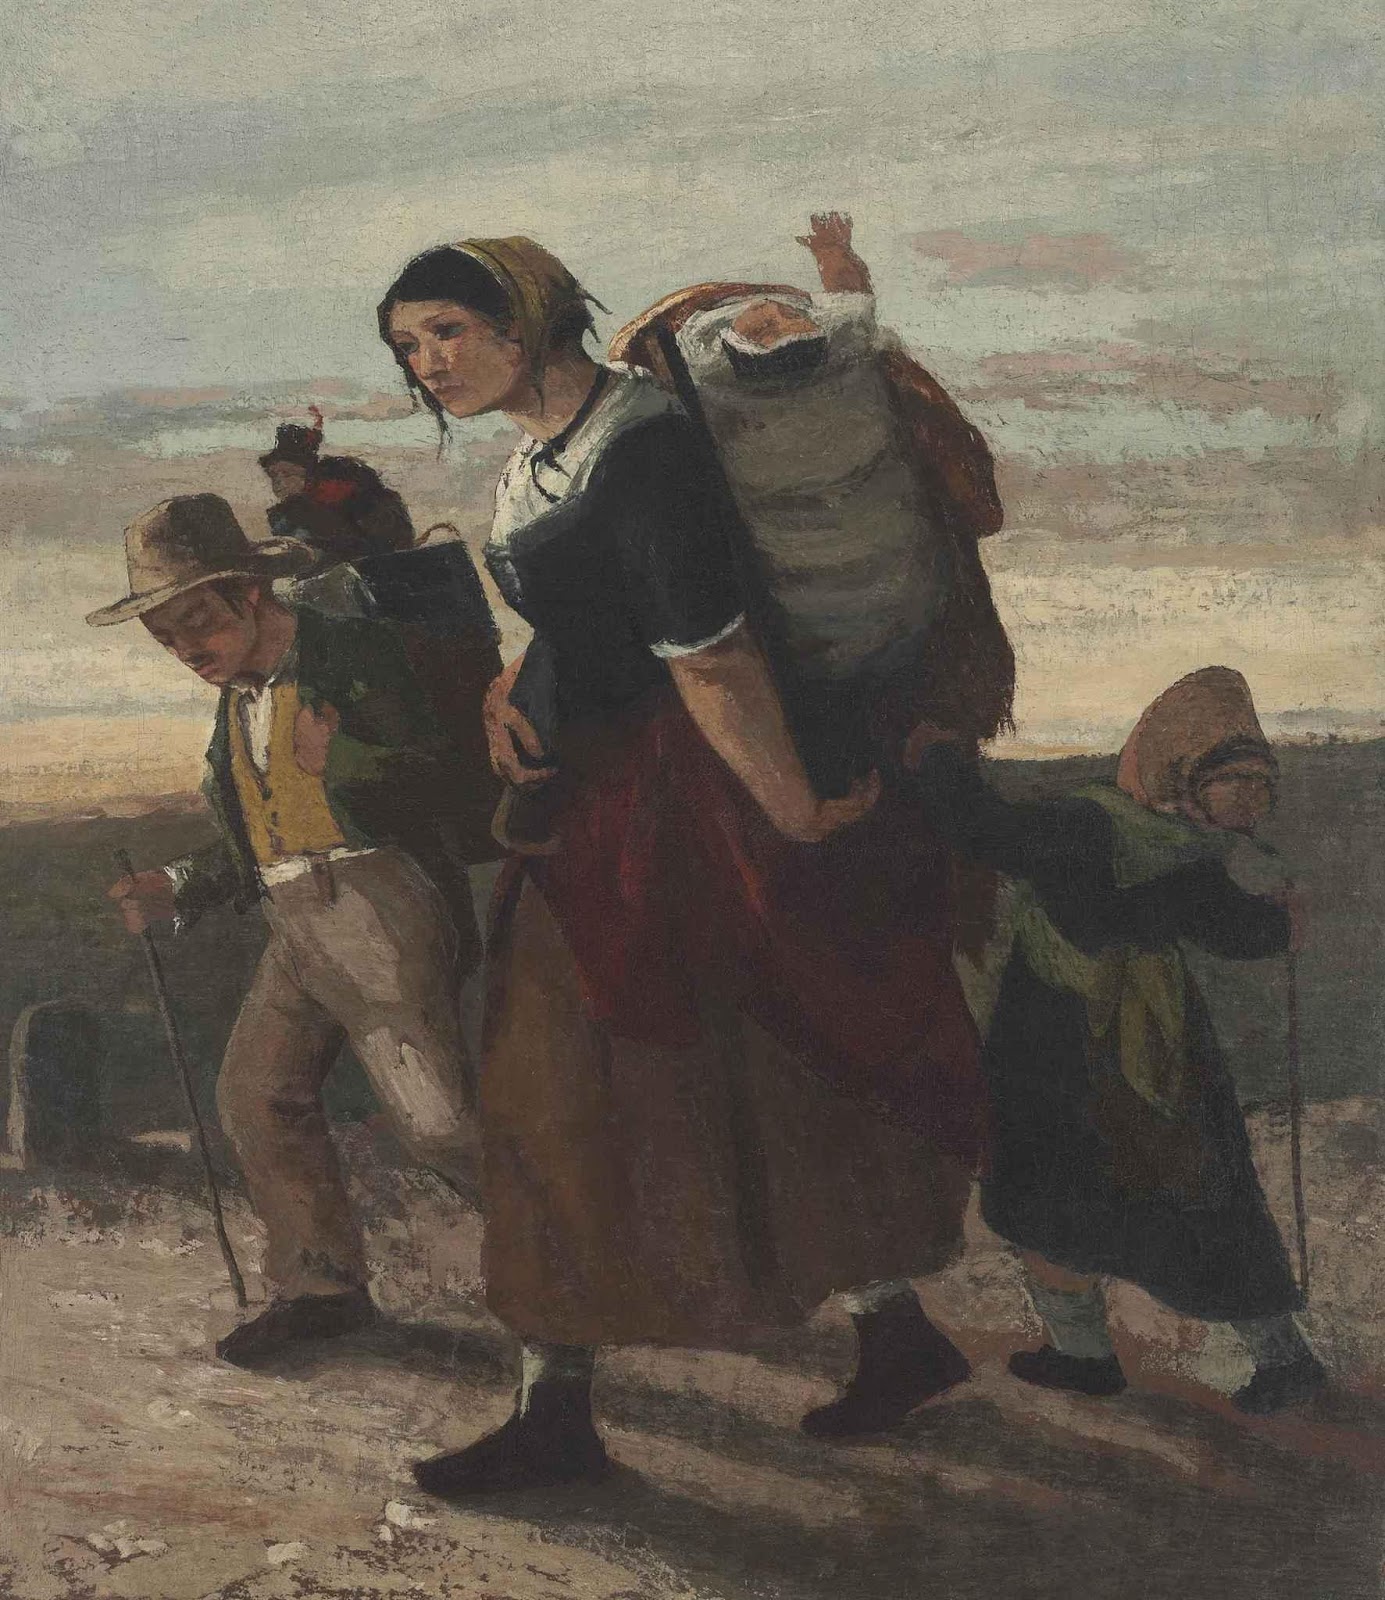 Gustave+Courbet-1819-1877 (87).jpg